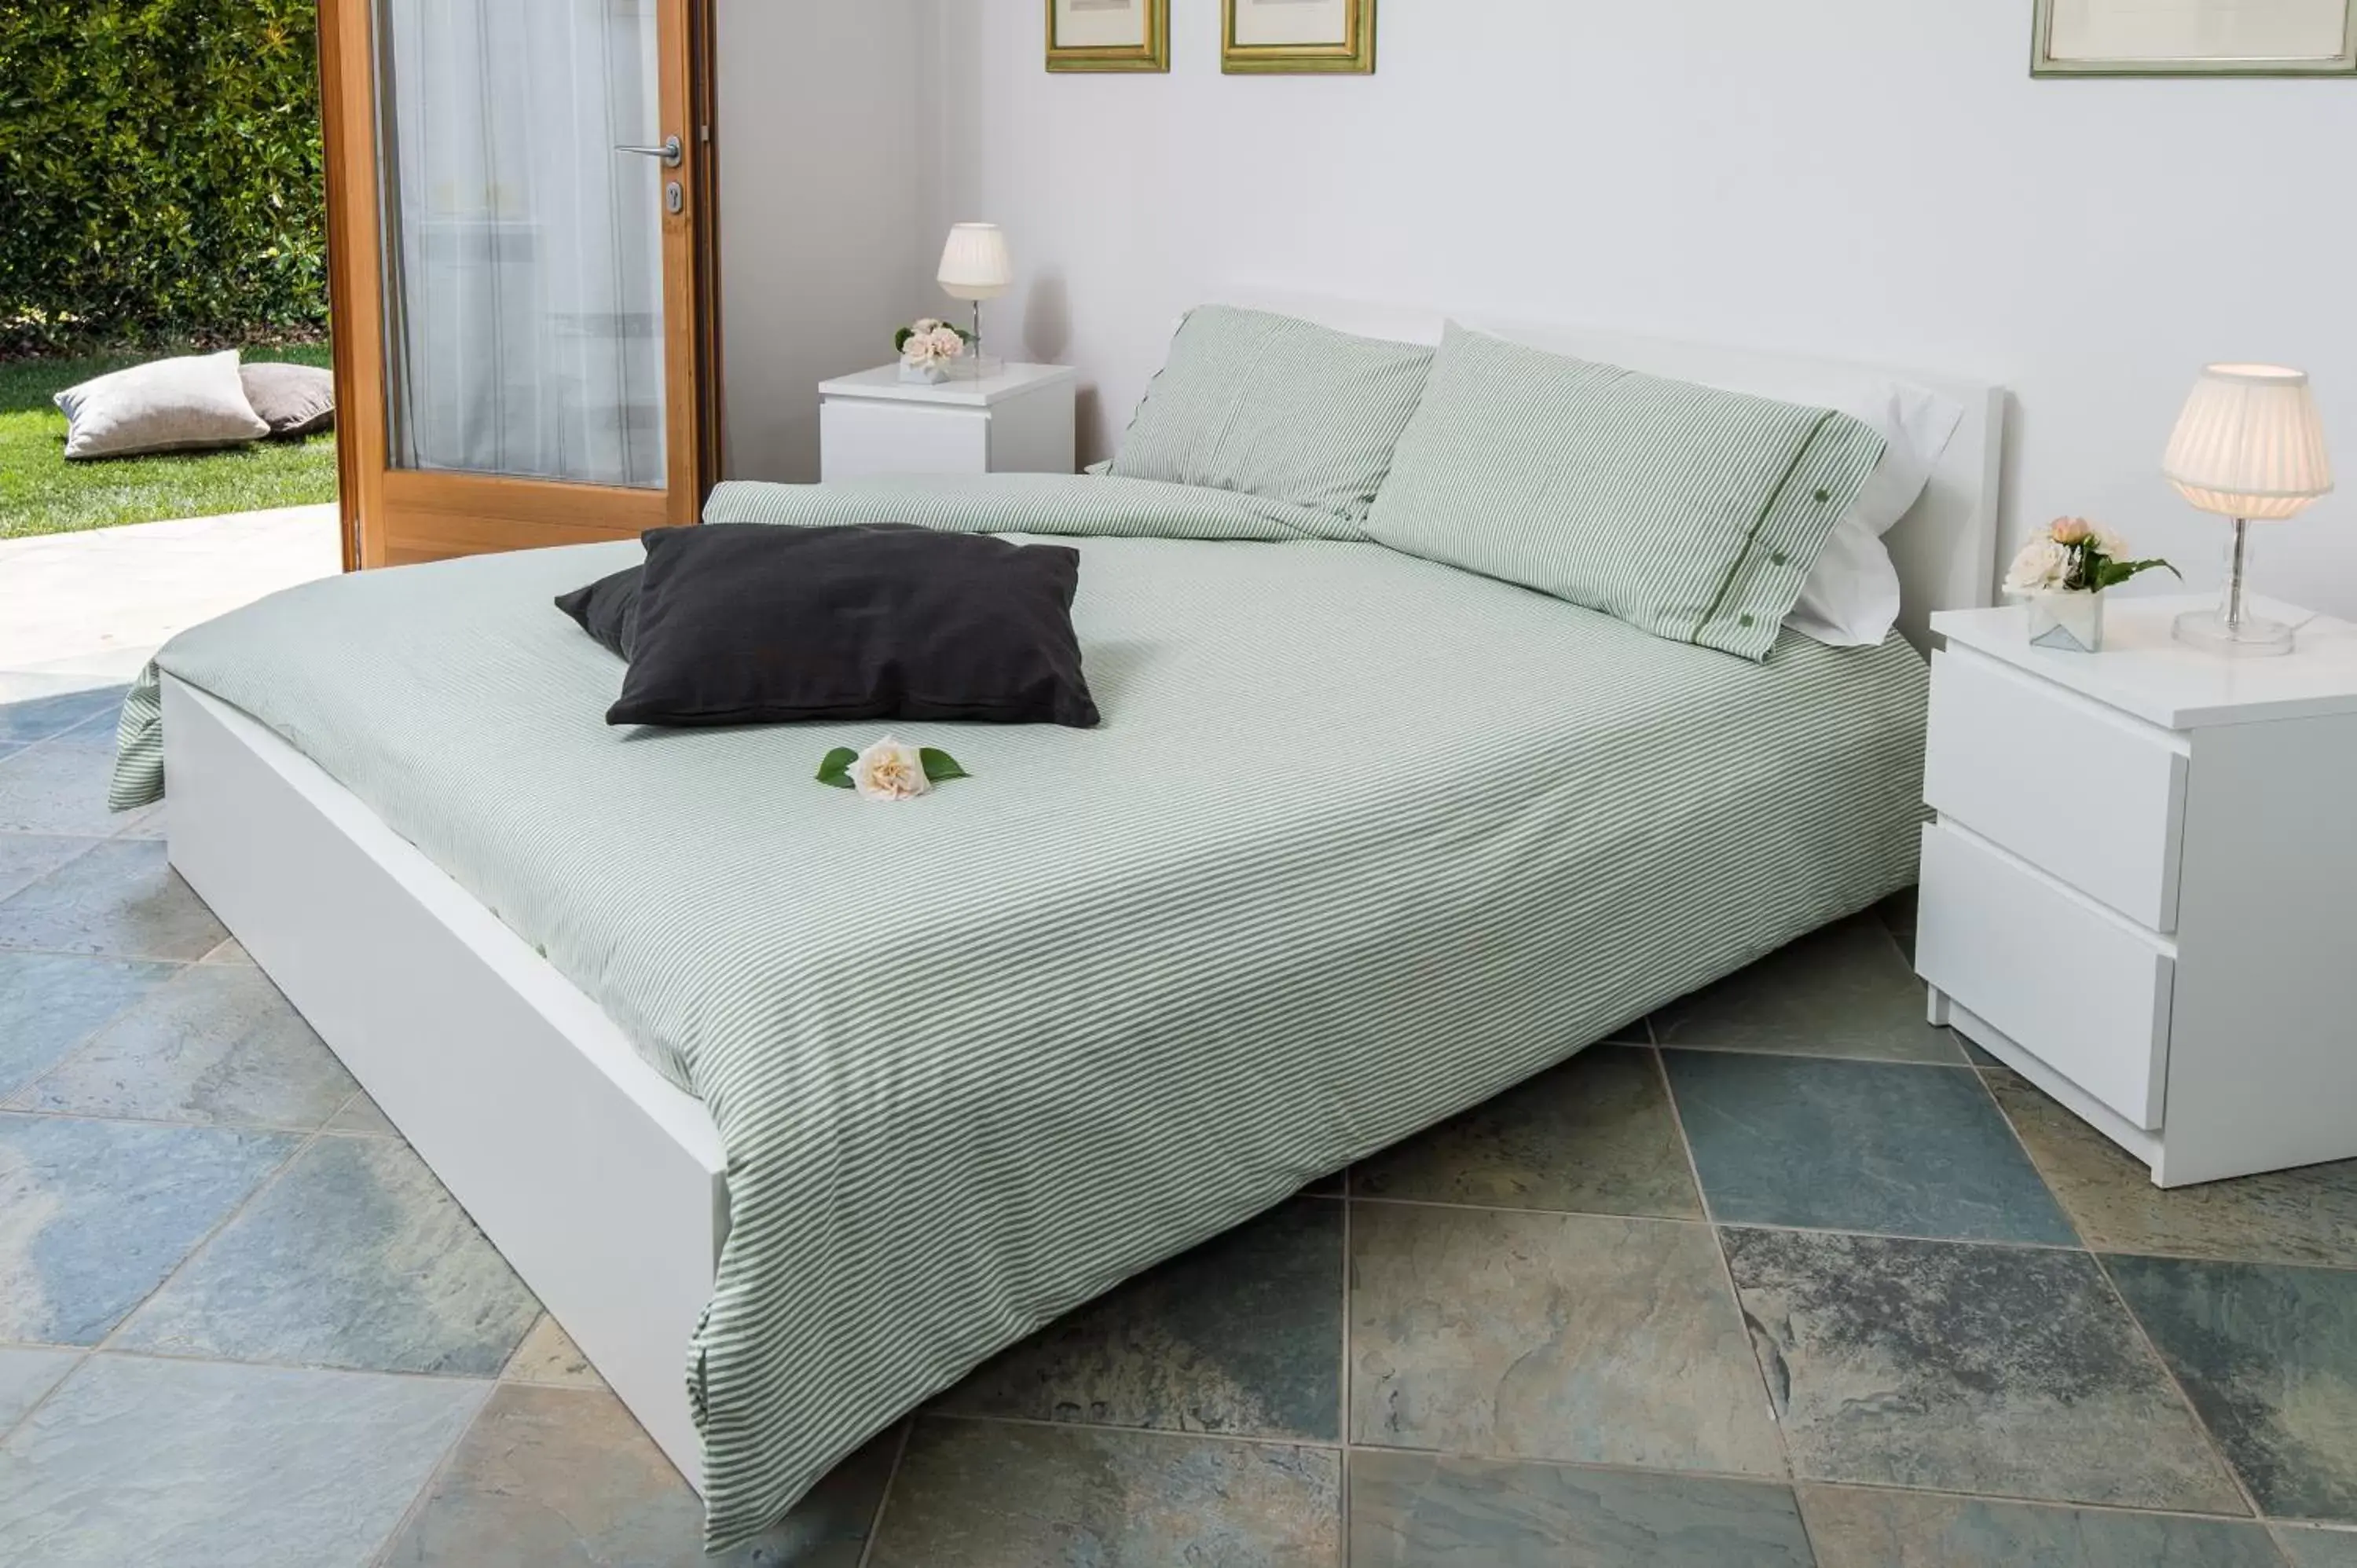 Bed, Room Photo in La Casa di Linda